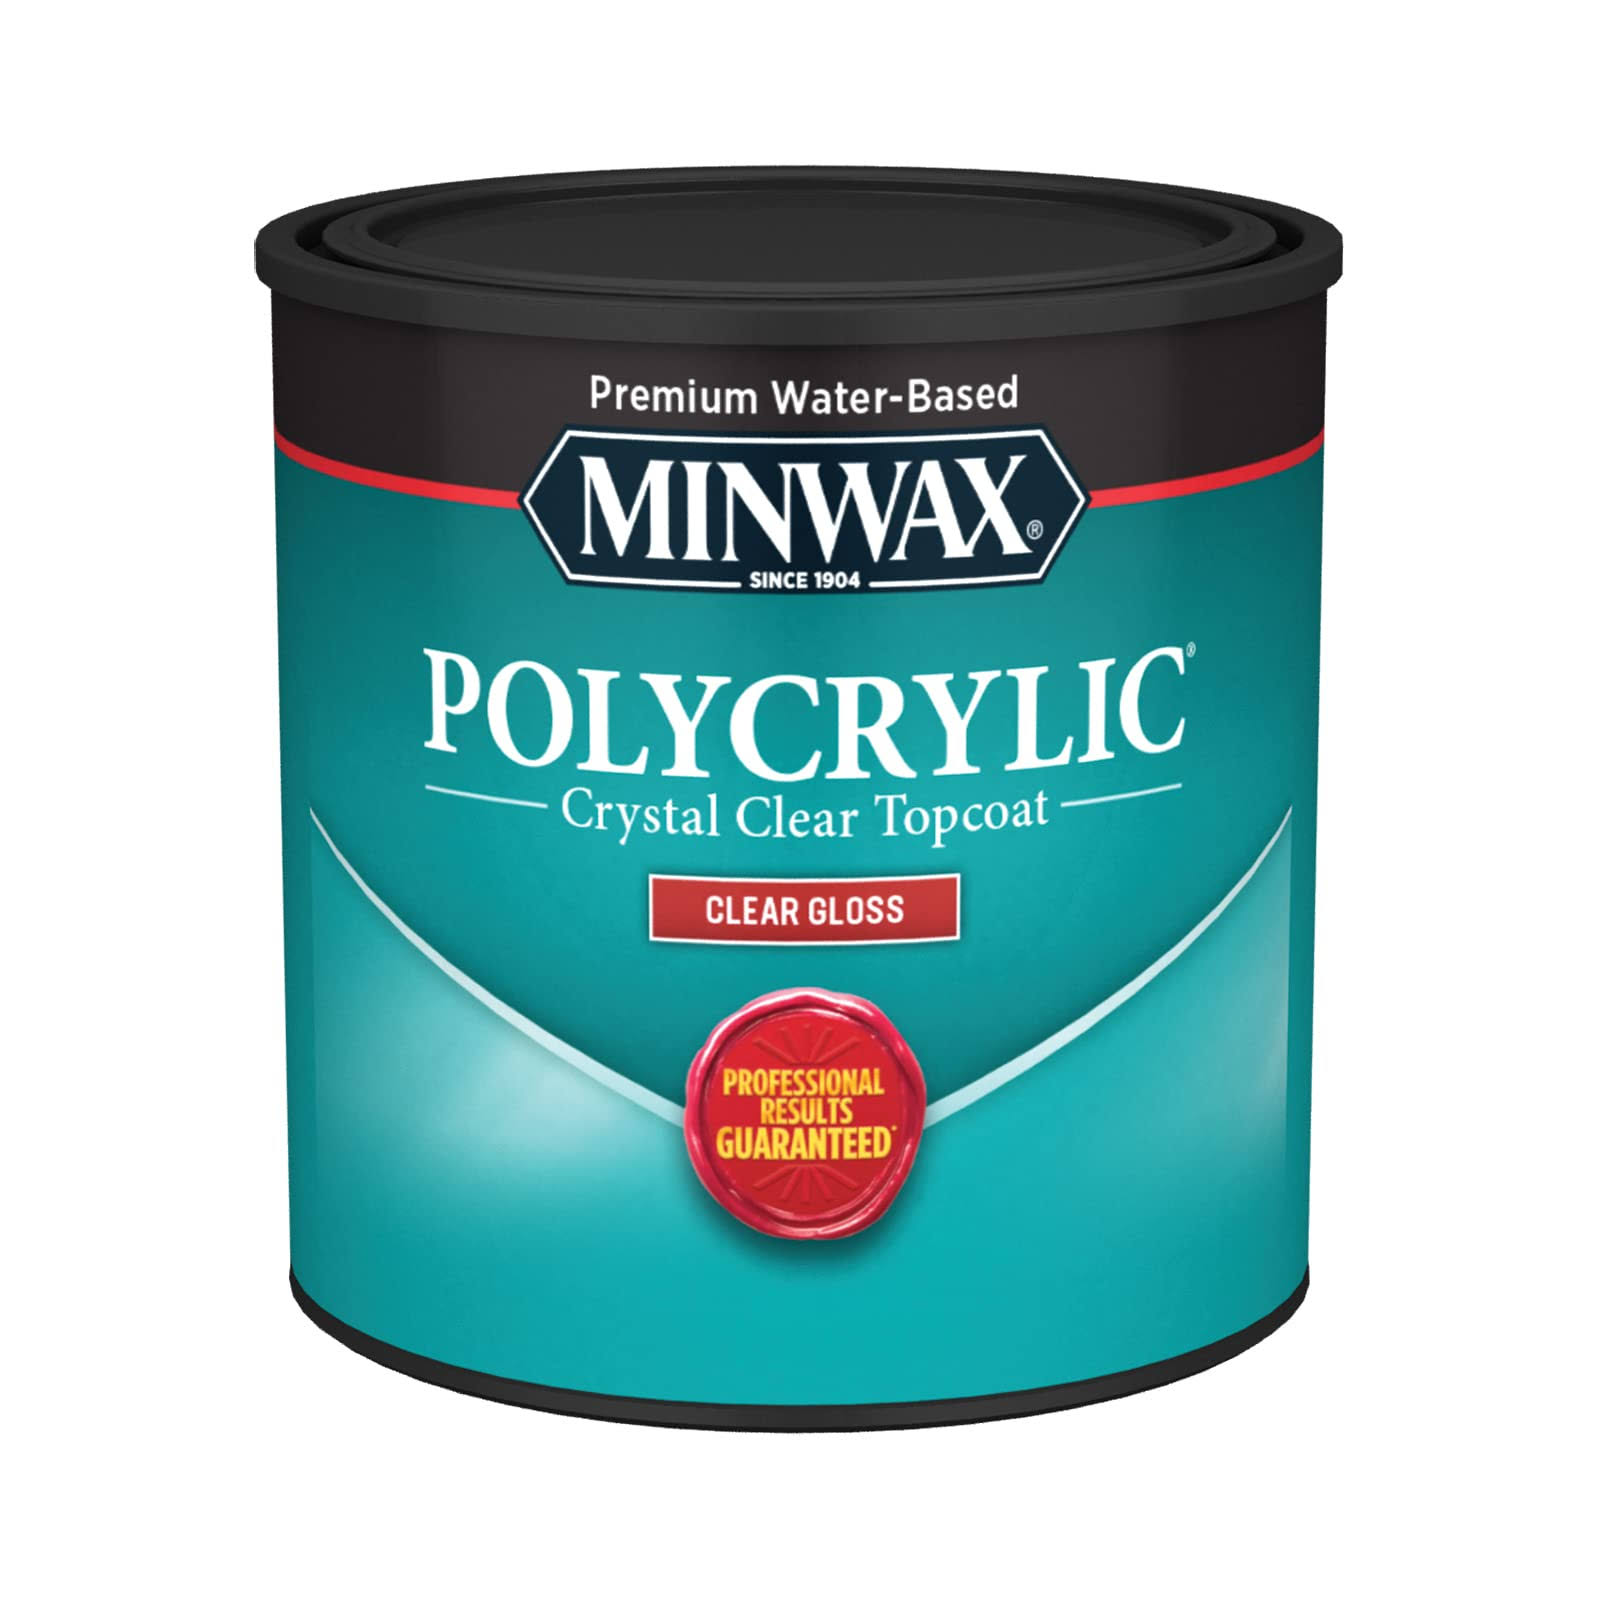 Minwax Polycrylic Protective Finish - Clear Gloss